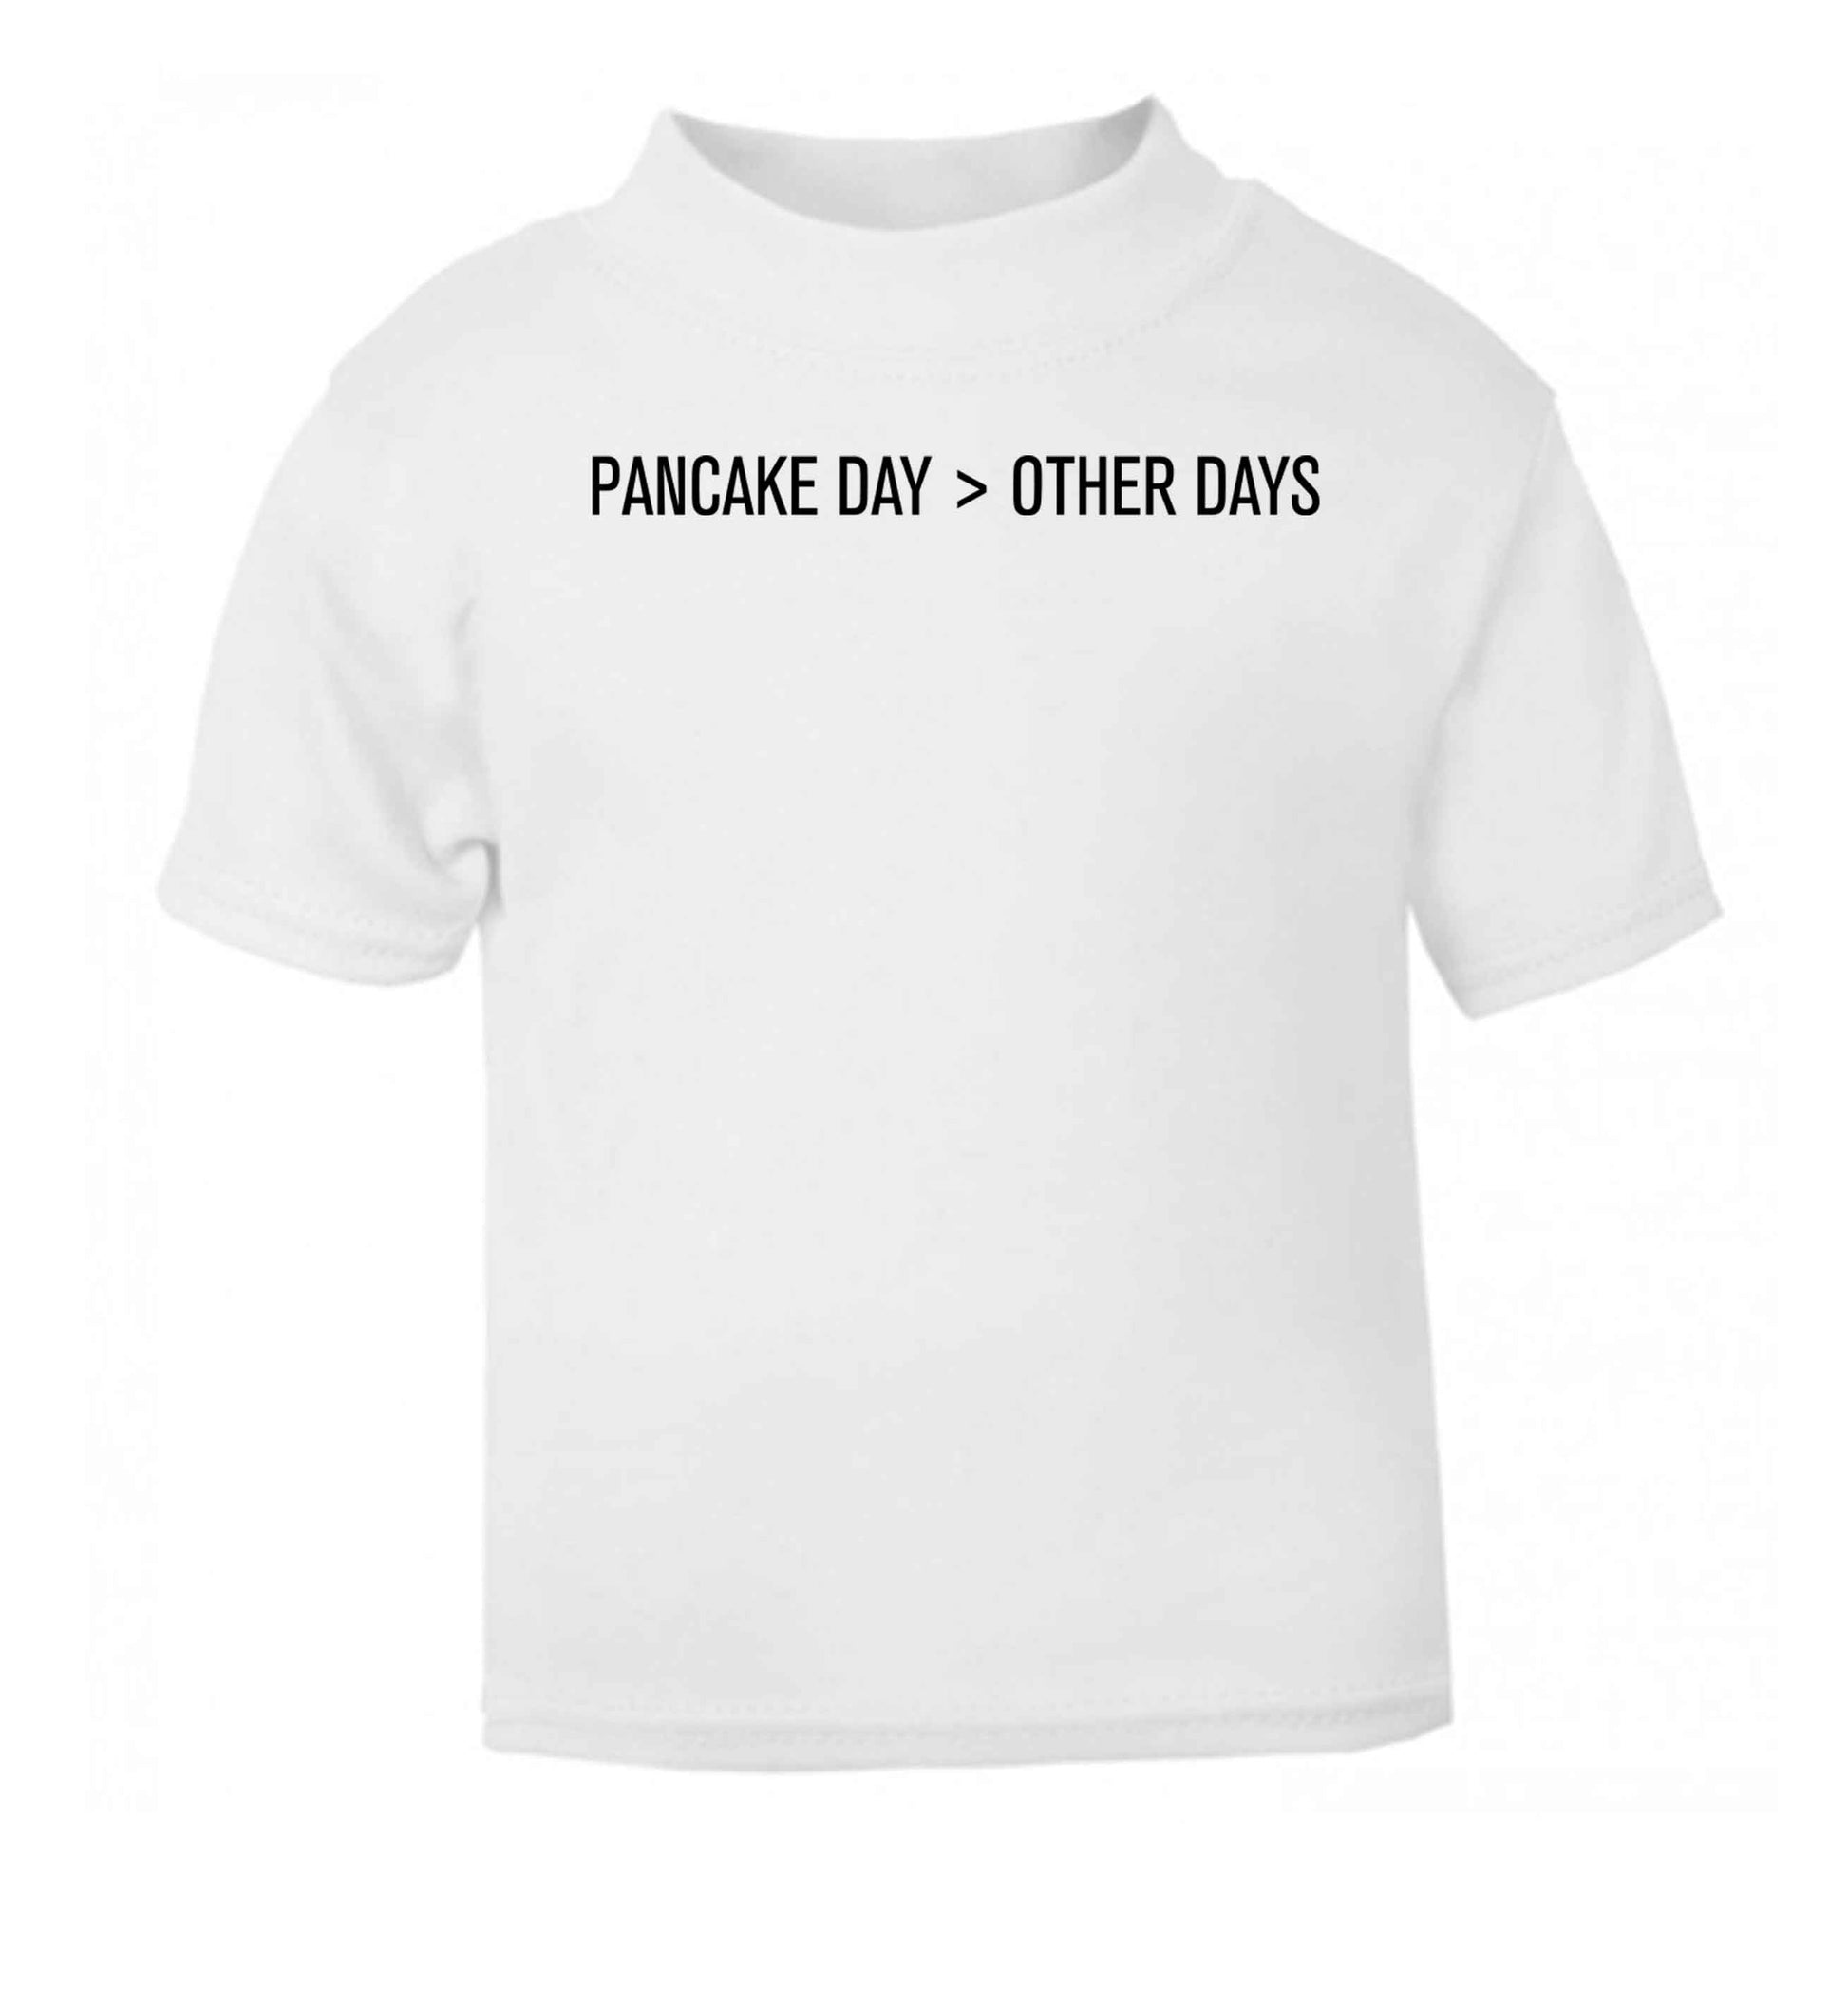 Pancake day > other days white baby toddler Tshirt 2 Years